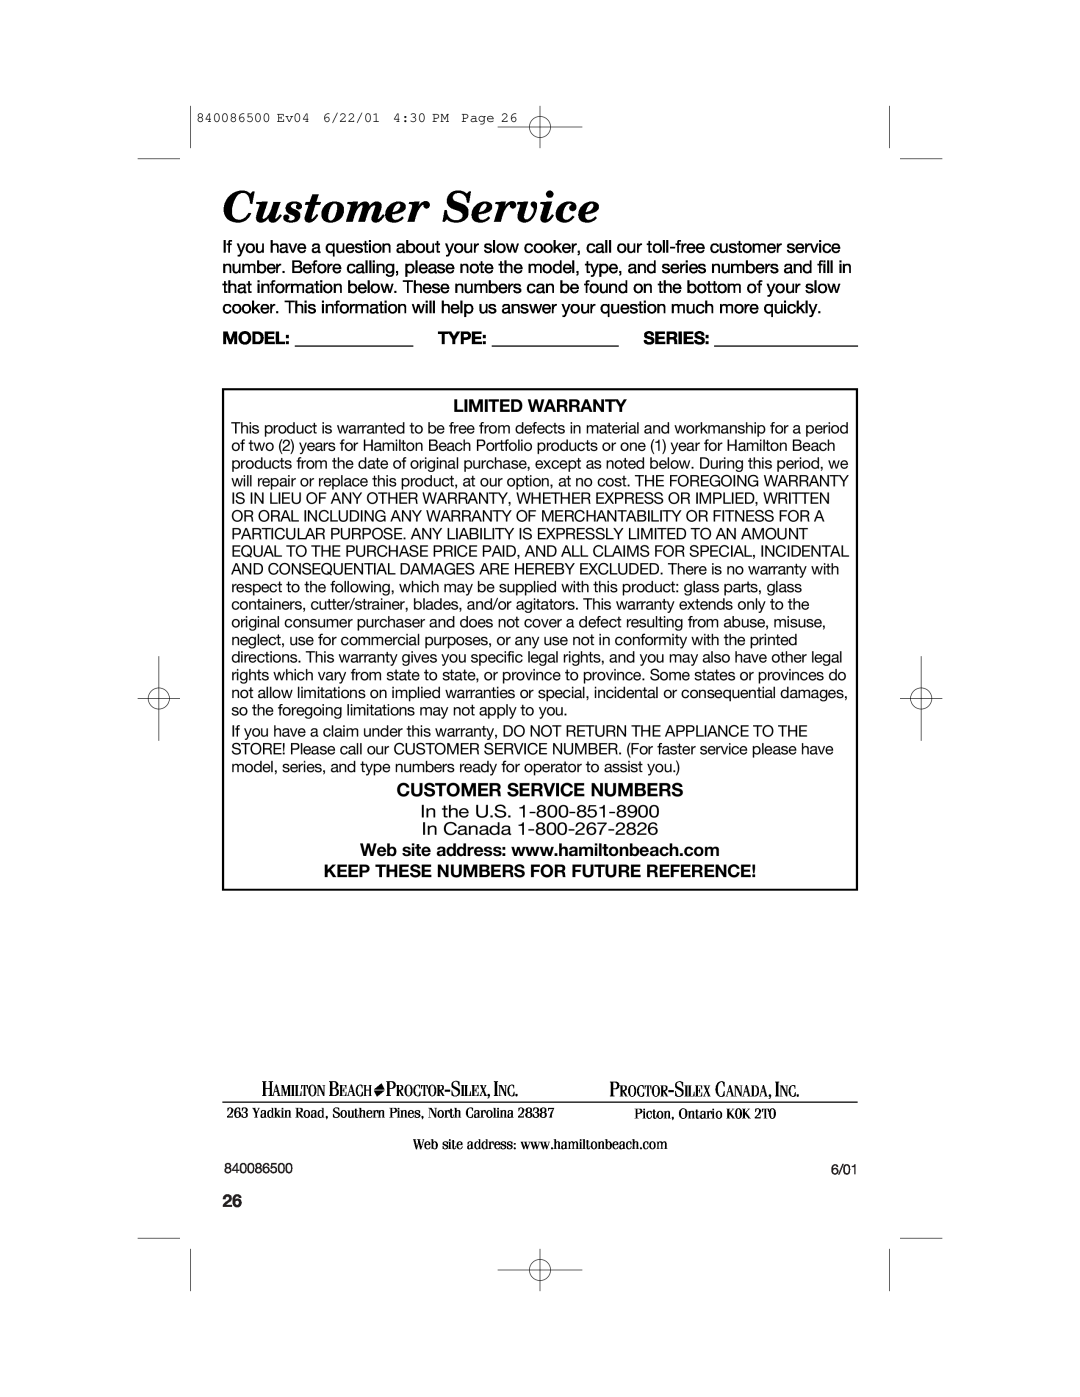 Hamilton Beach 33158 manual Customer Service Numbers, Model Type Series Limited Warranty 